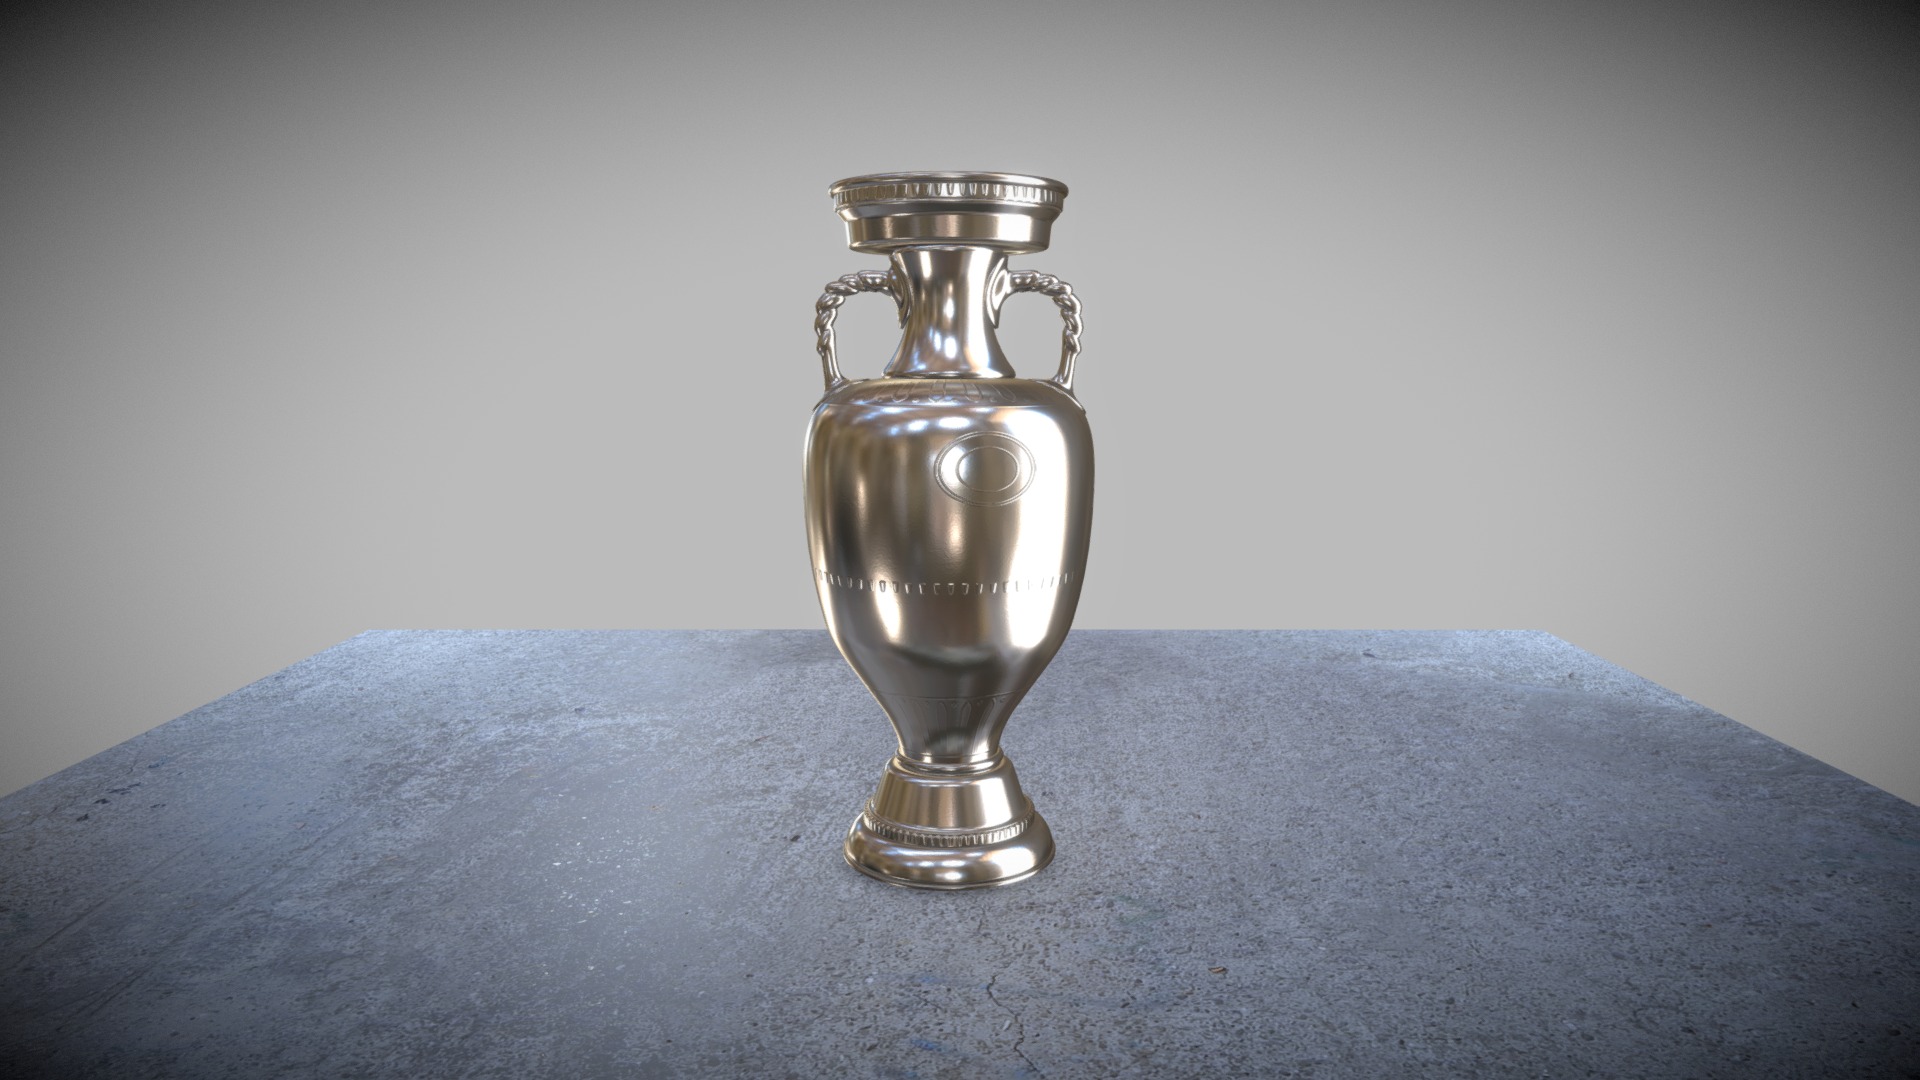 3D model European Football Championships Cup - This is a 3D model of the European Football Championships Cup. The 3D model is about a glass jar with a handle.